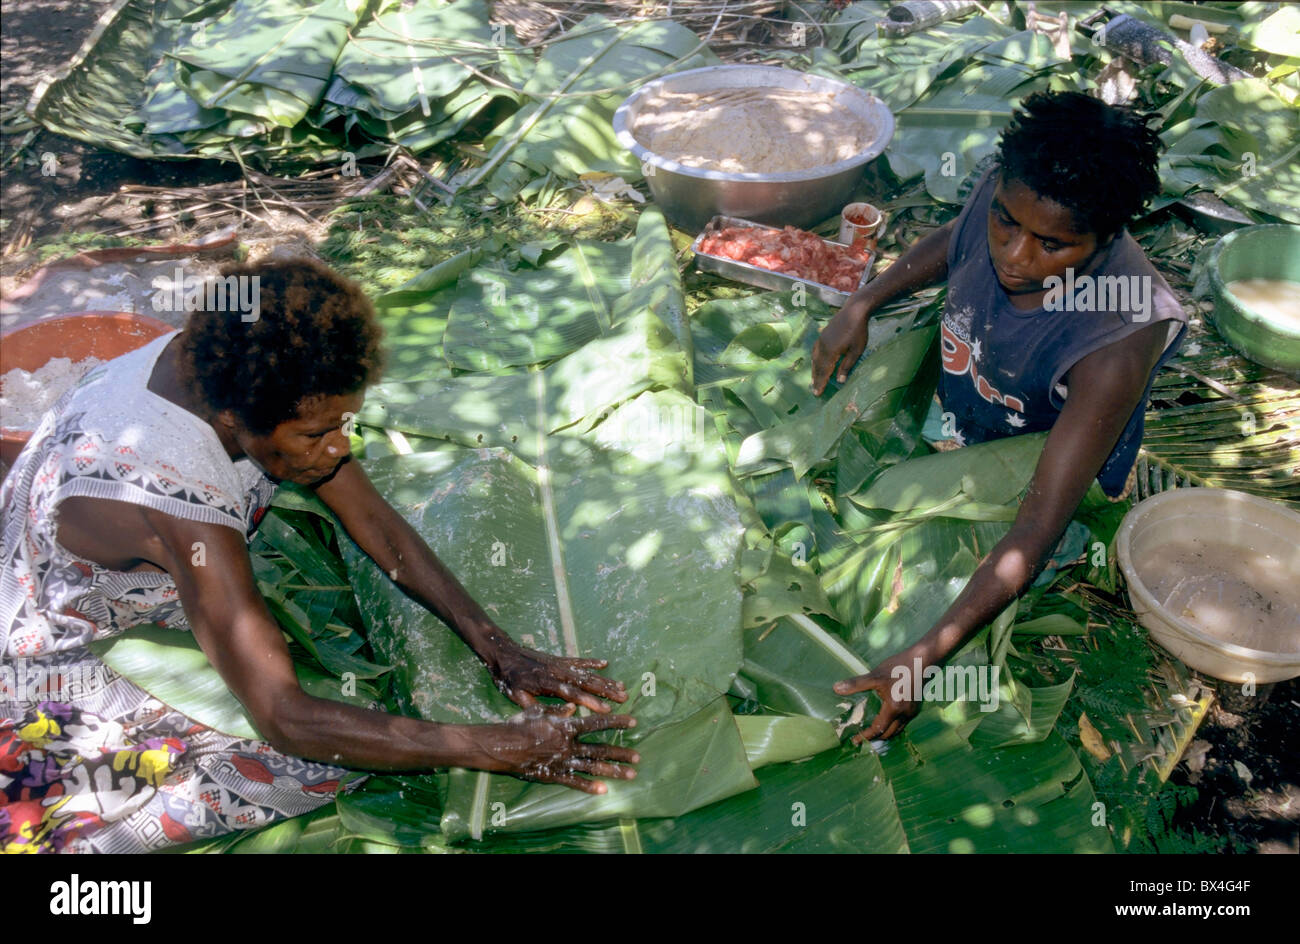 Women preparing cooking traditional laplap dishes, Sulphur Bay Village, Ipekel Ipeukel, Tanna Island, Vanuatu. Stock Photo